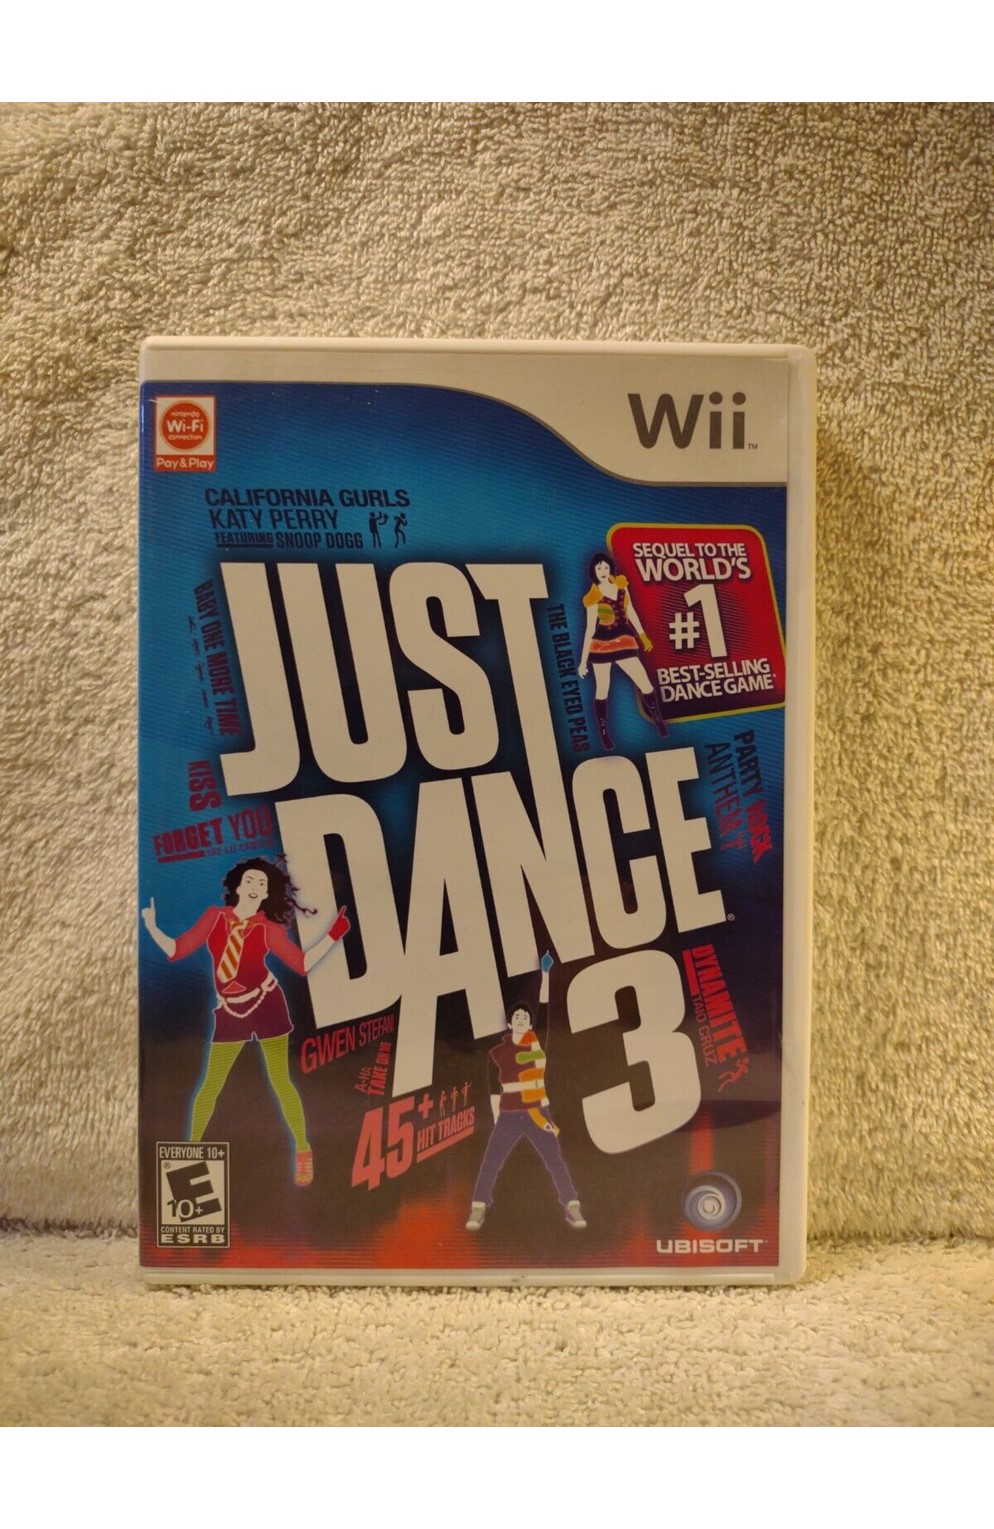 Nintendo Wii Just Dance 3 - Sealed